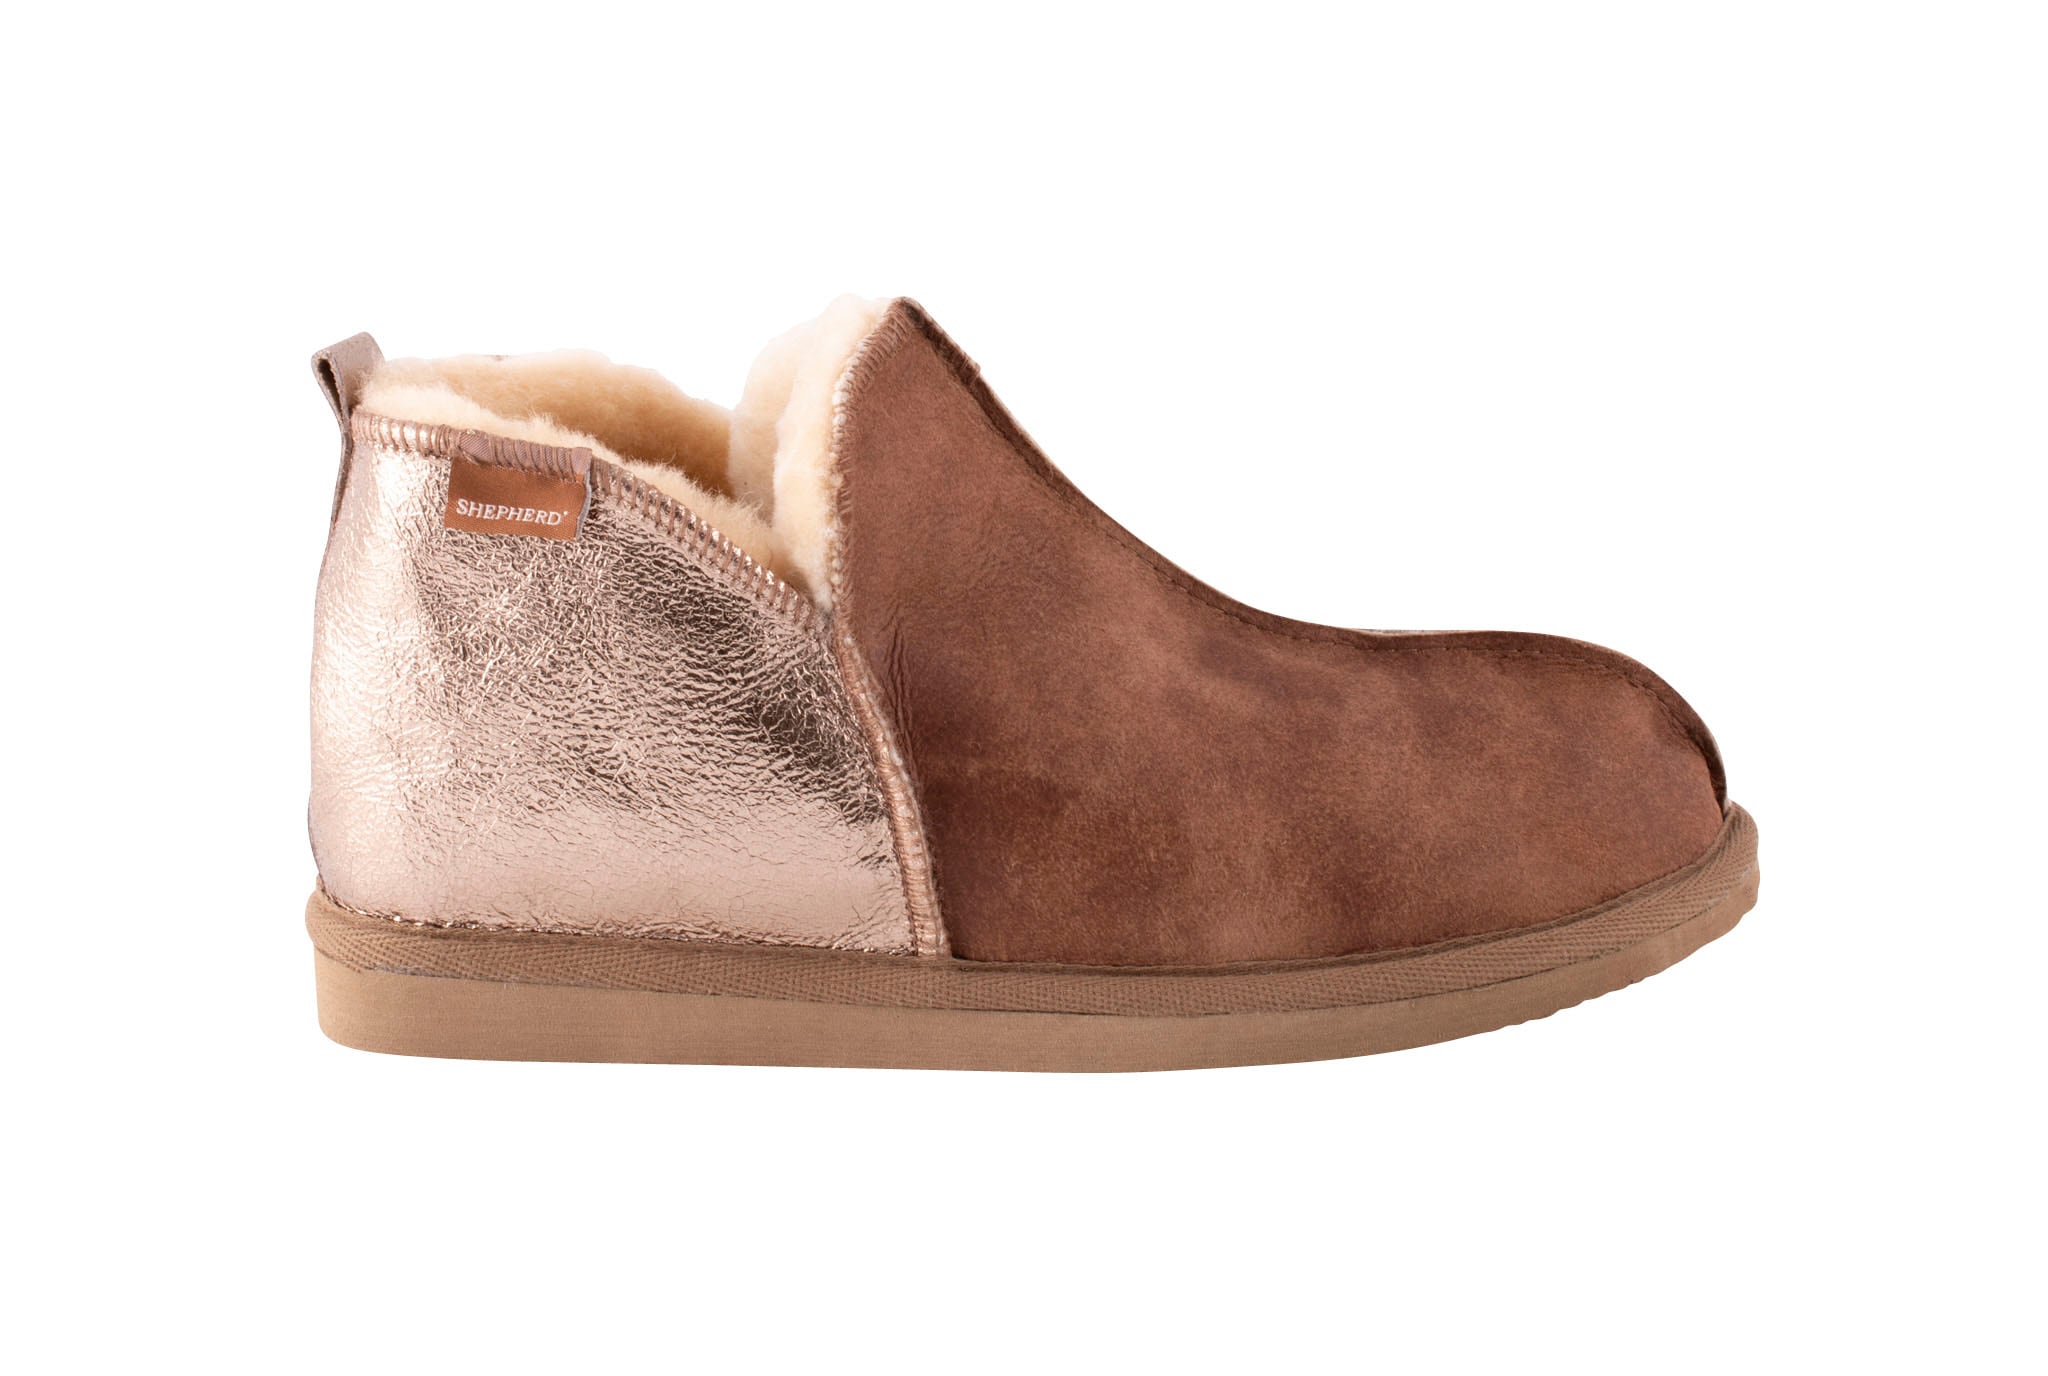 Shepherd Annie - Sheepskin slippers for women.